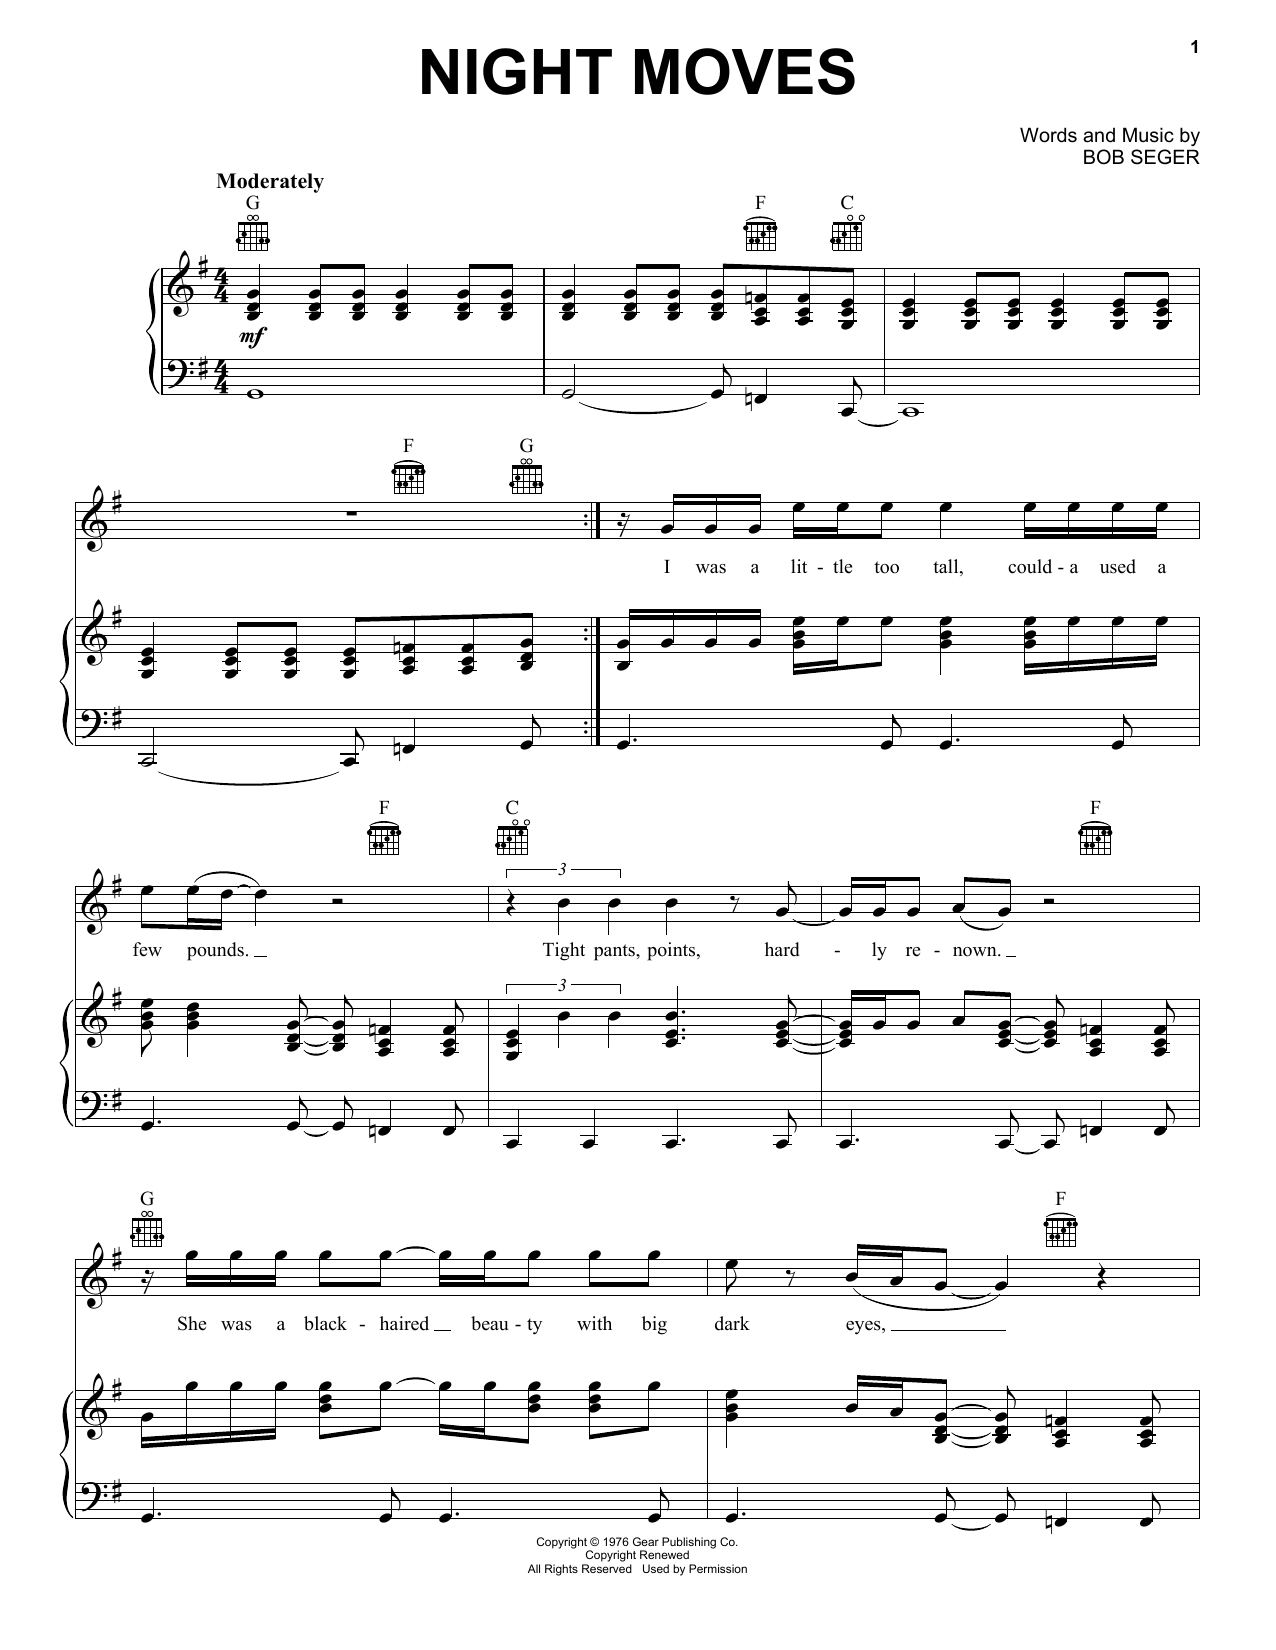 Bob Seger Night Moves Sheet Music Notes & Chords for Ukulele - Download or Print PDF